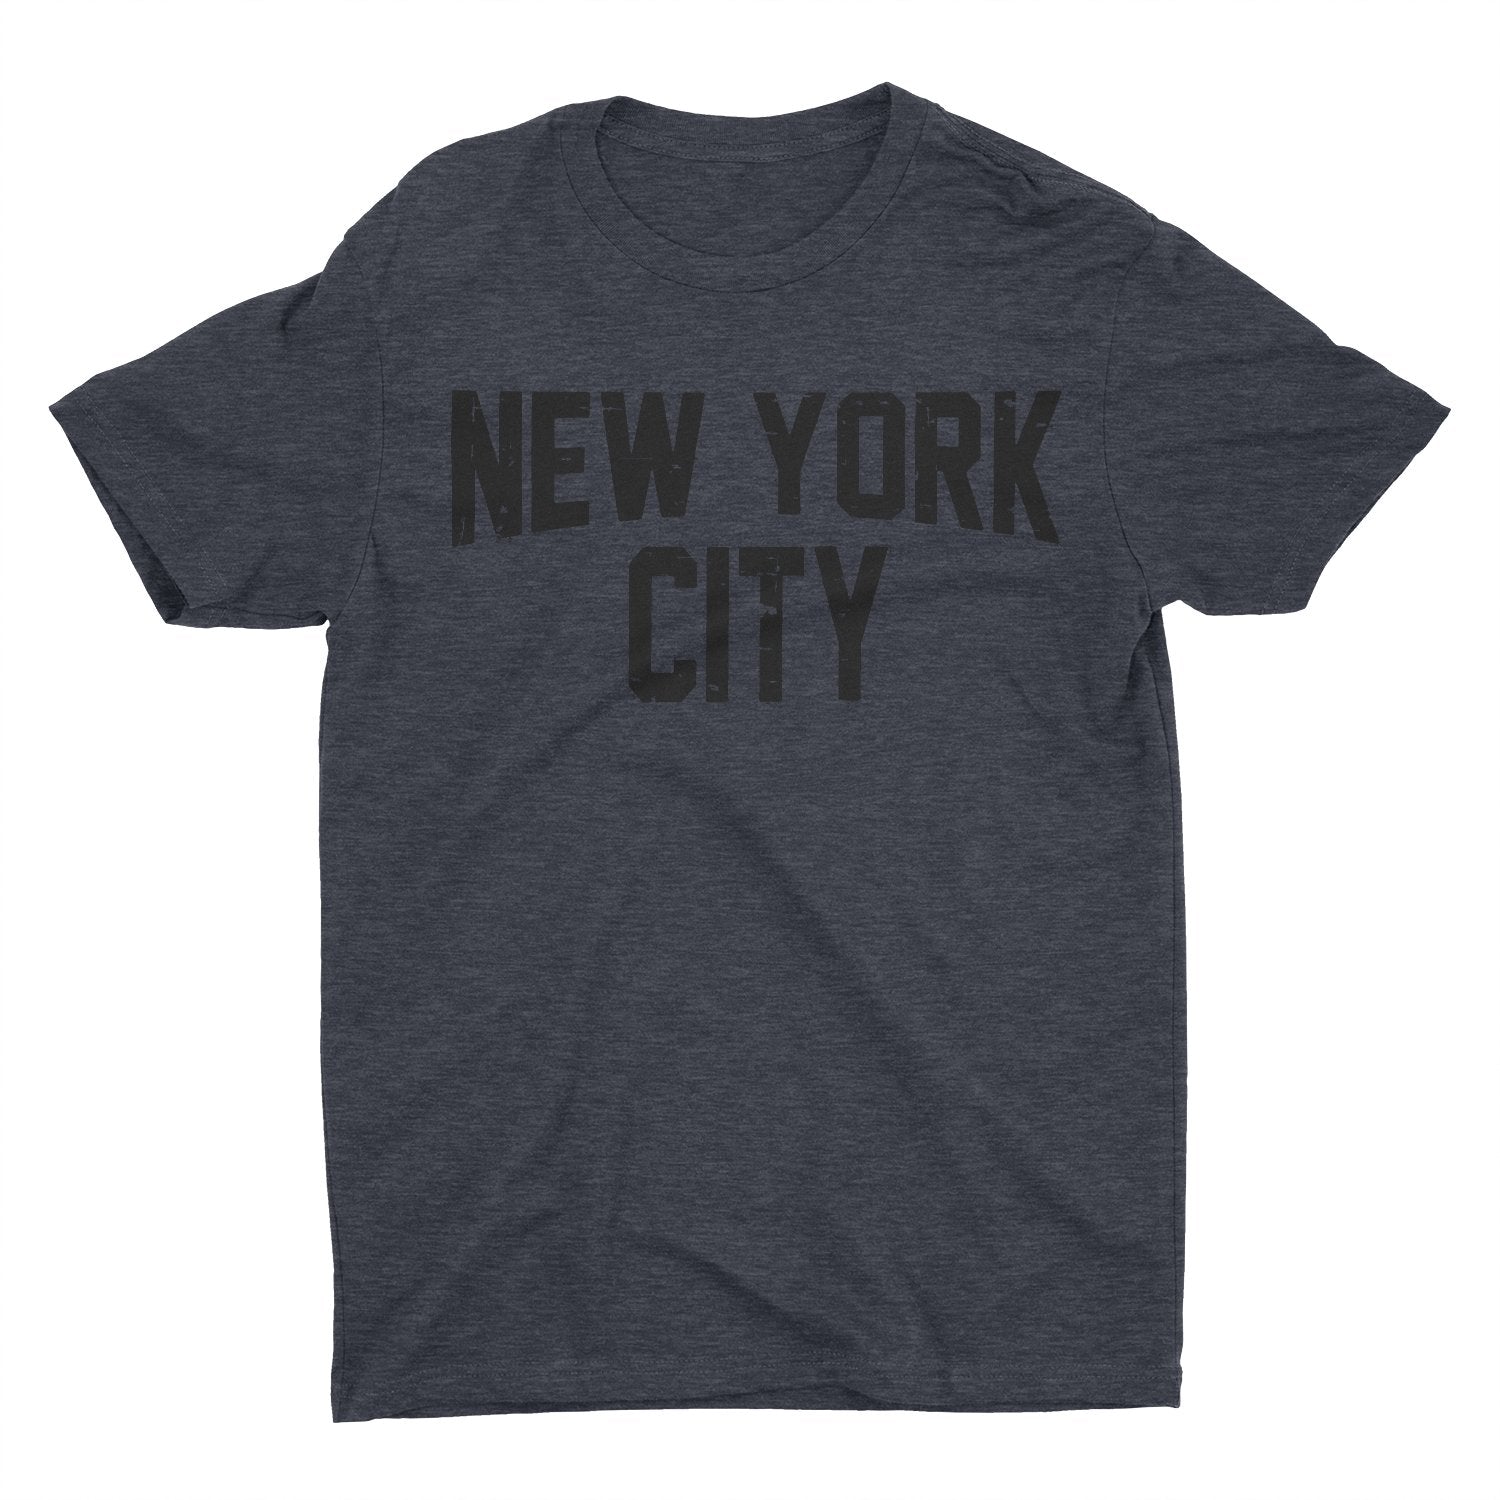 New York City Unisex T-Shirt Distressed Screenprinted Charocal Lennon Tee